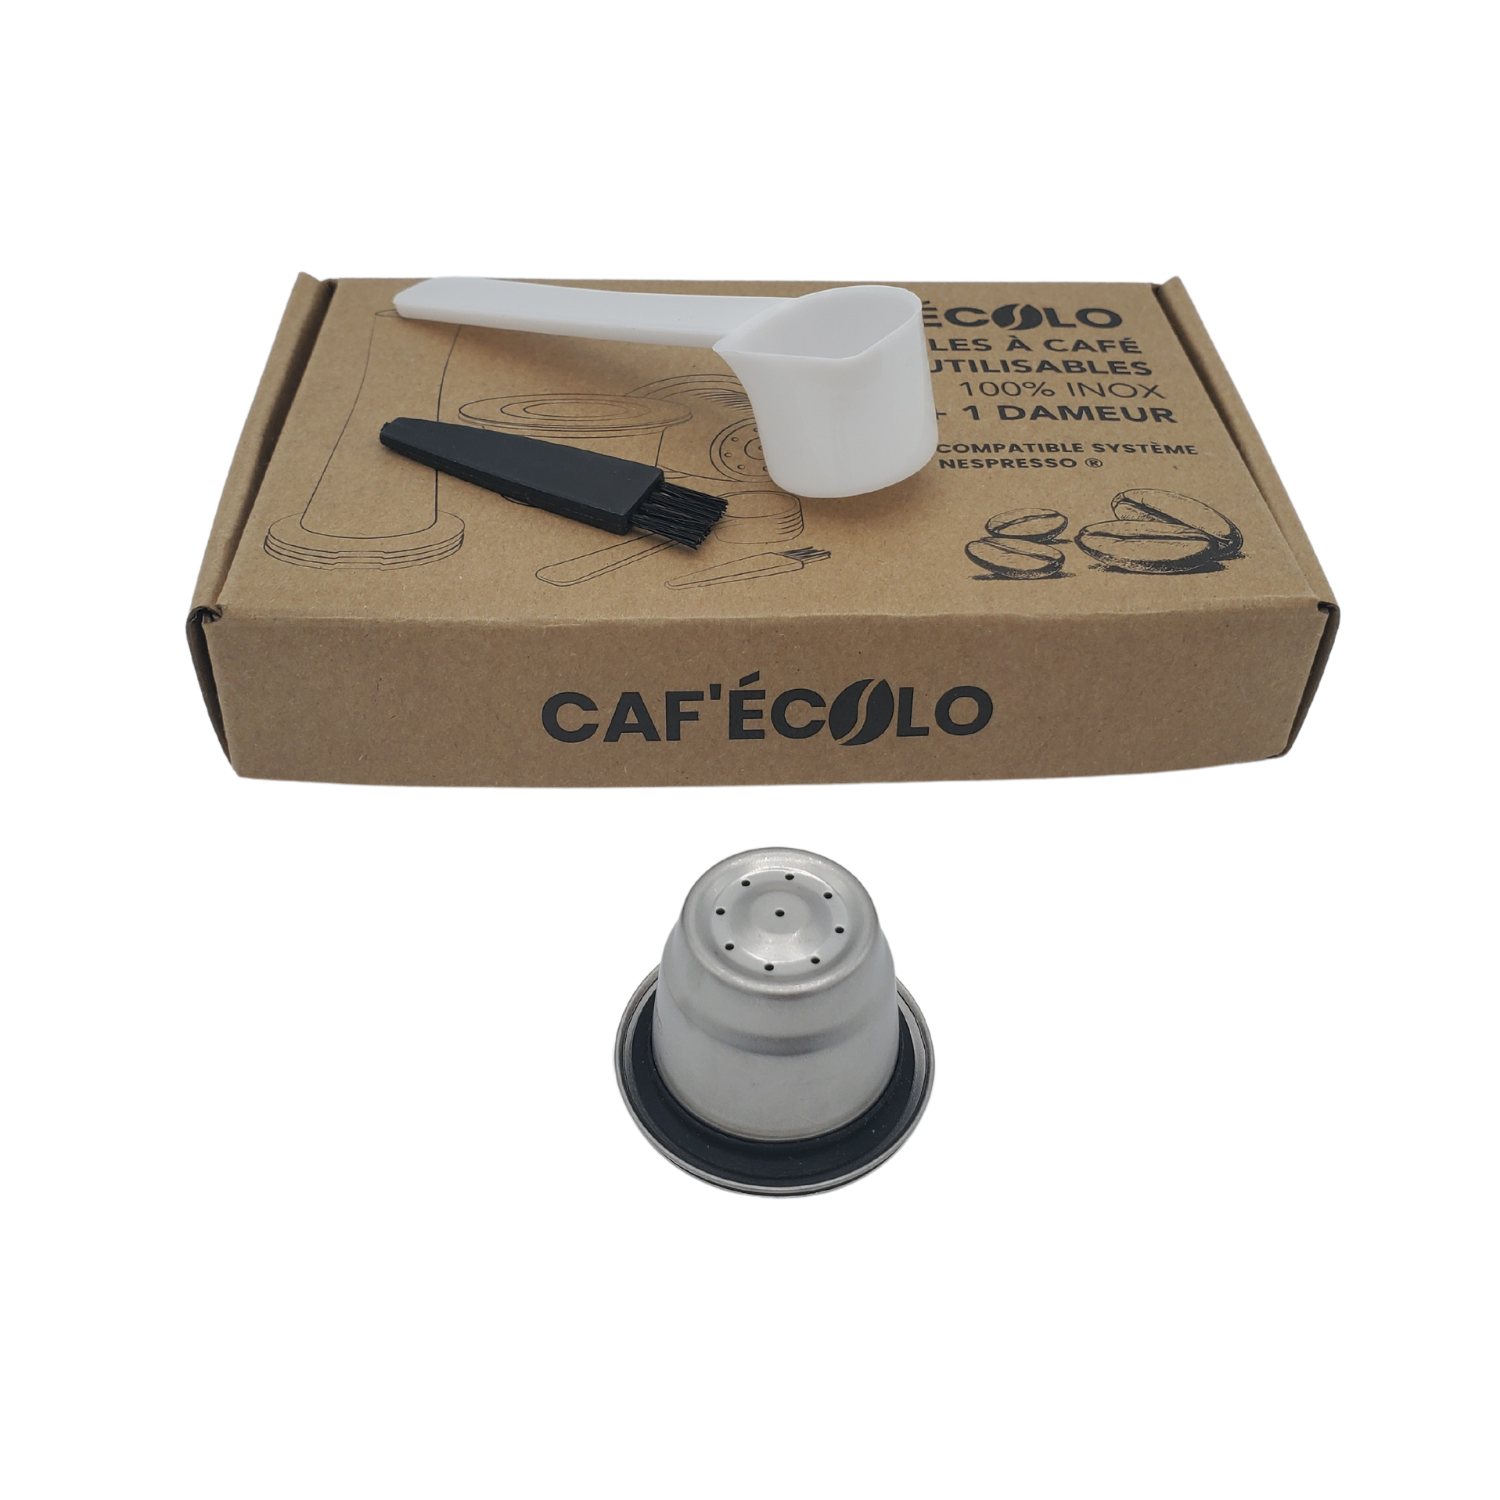 Boîte de capsules Gran Barista - Capsules compatibles Nespresso® - Café  Barista